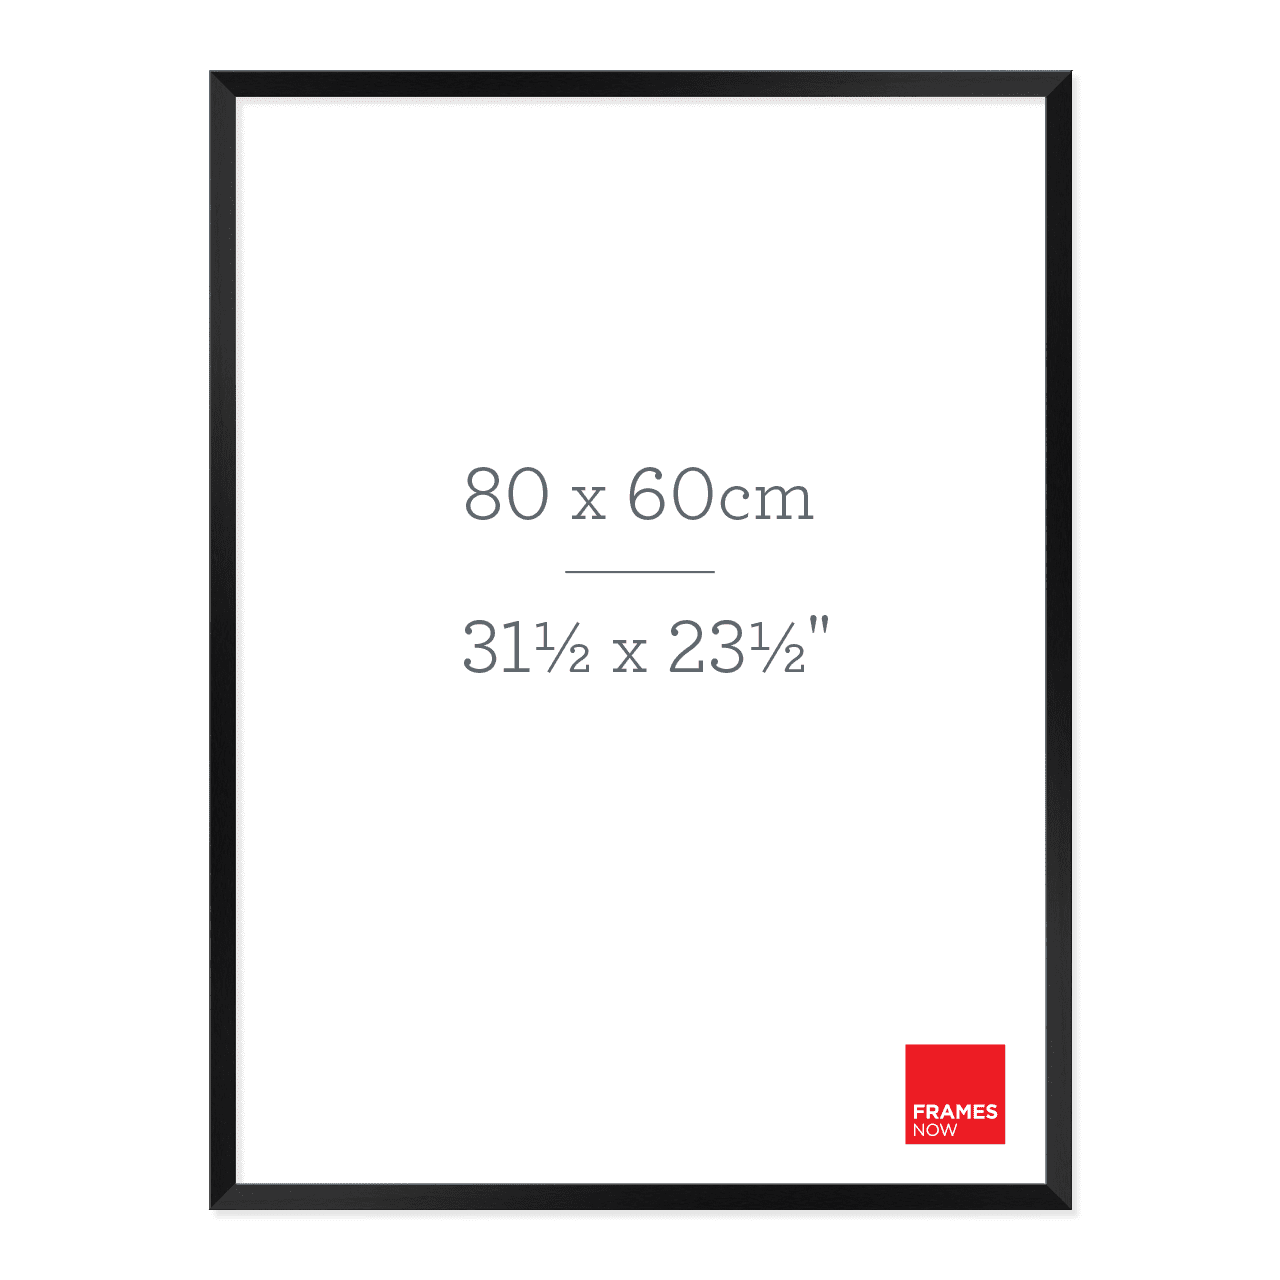 Premium Matte Black Box Picture Frame for 80 x 60cm Artwork